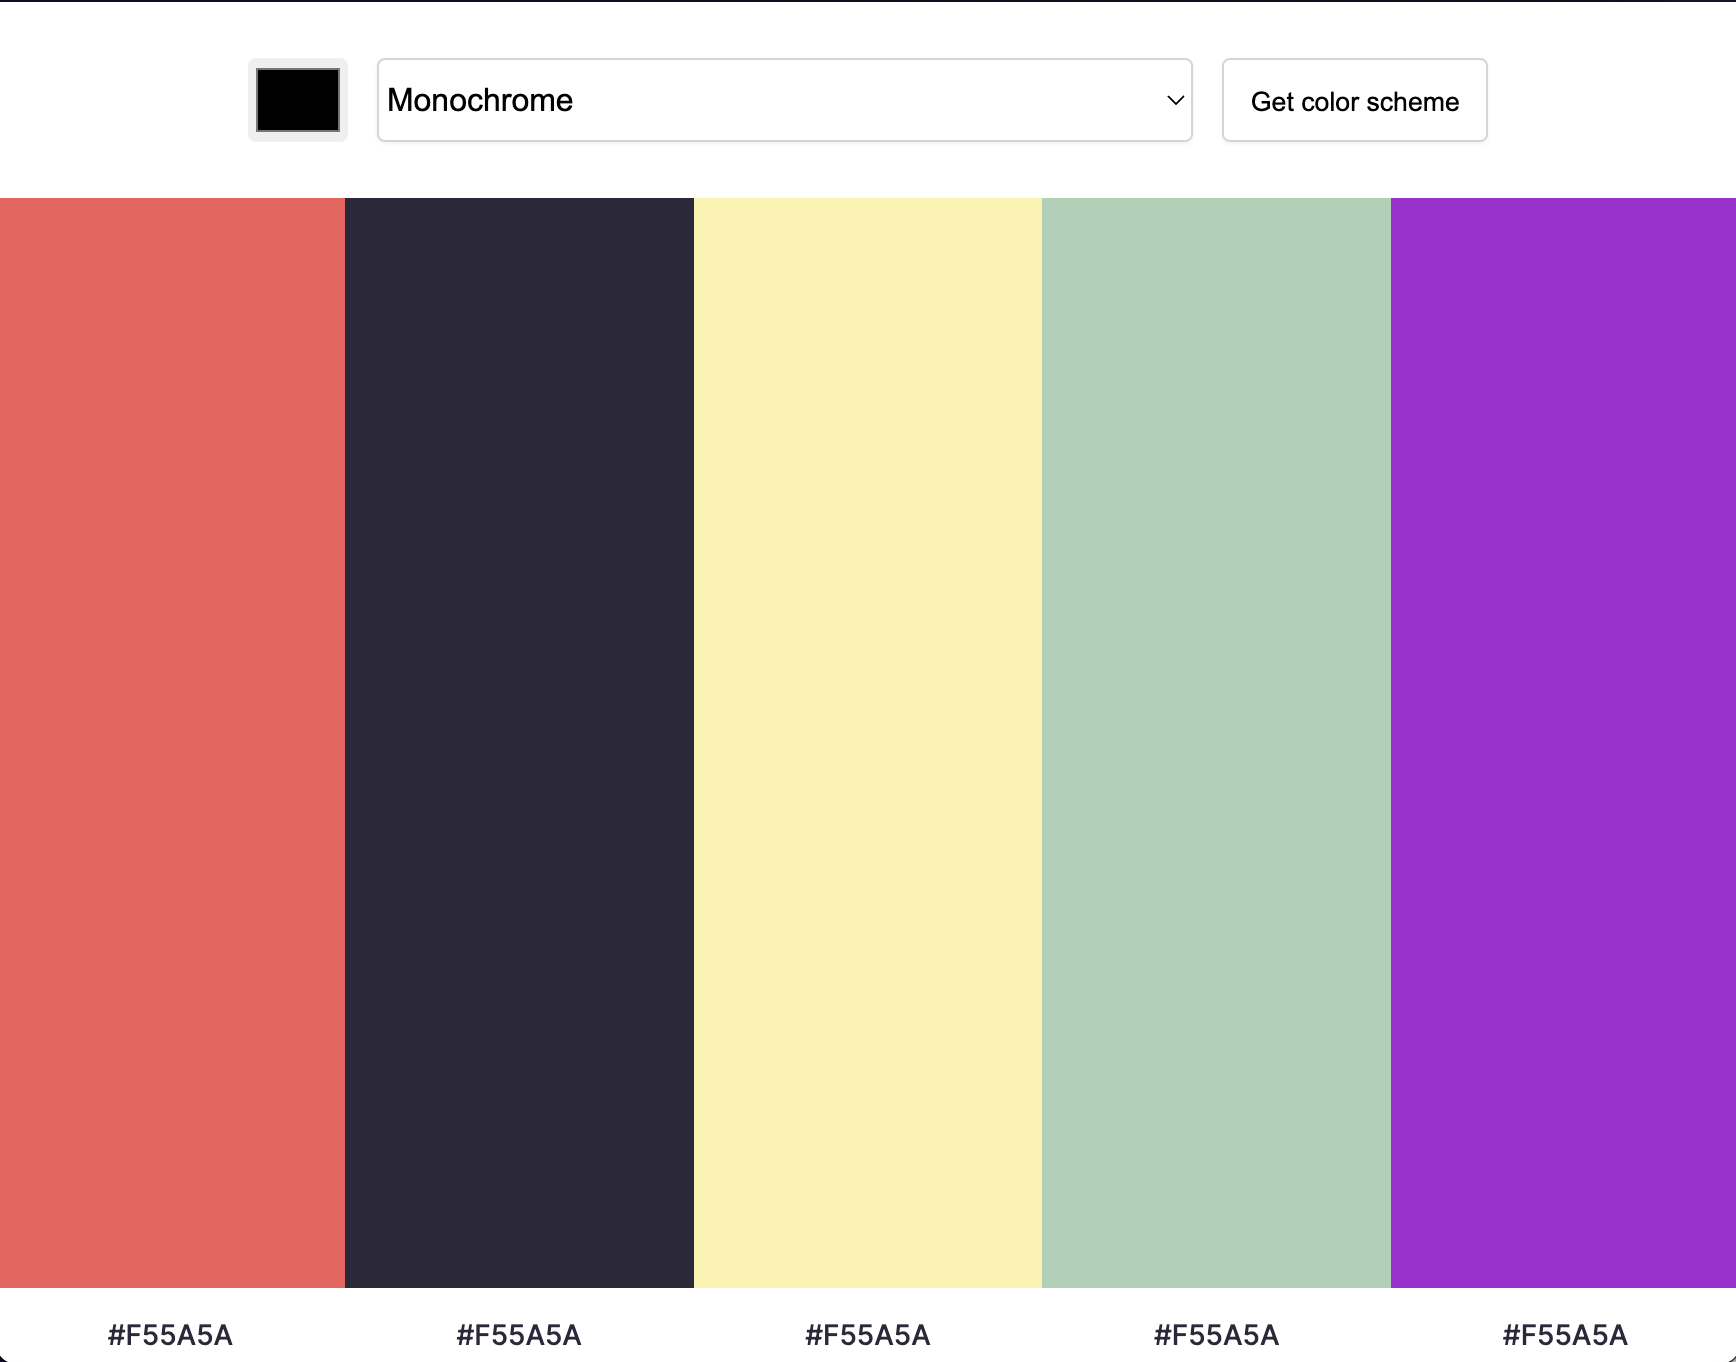 image of a color scheme generator app